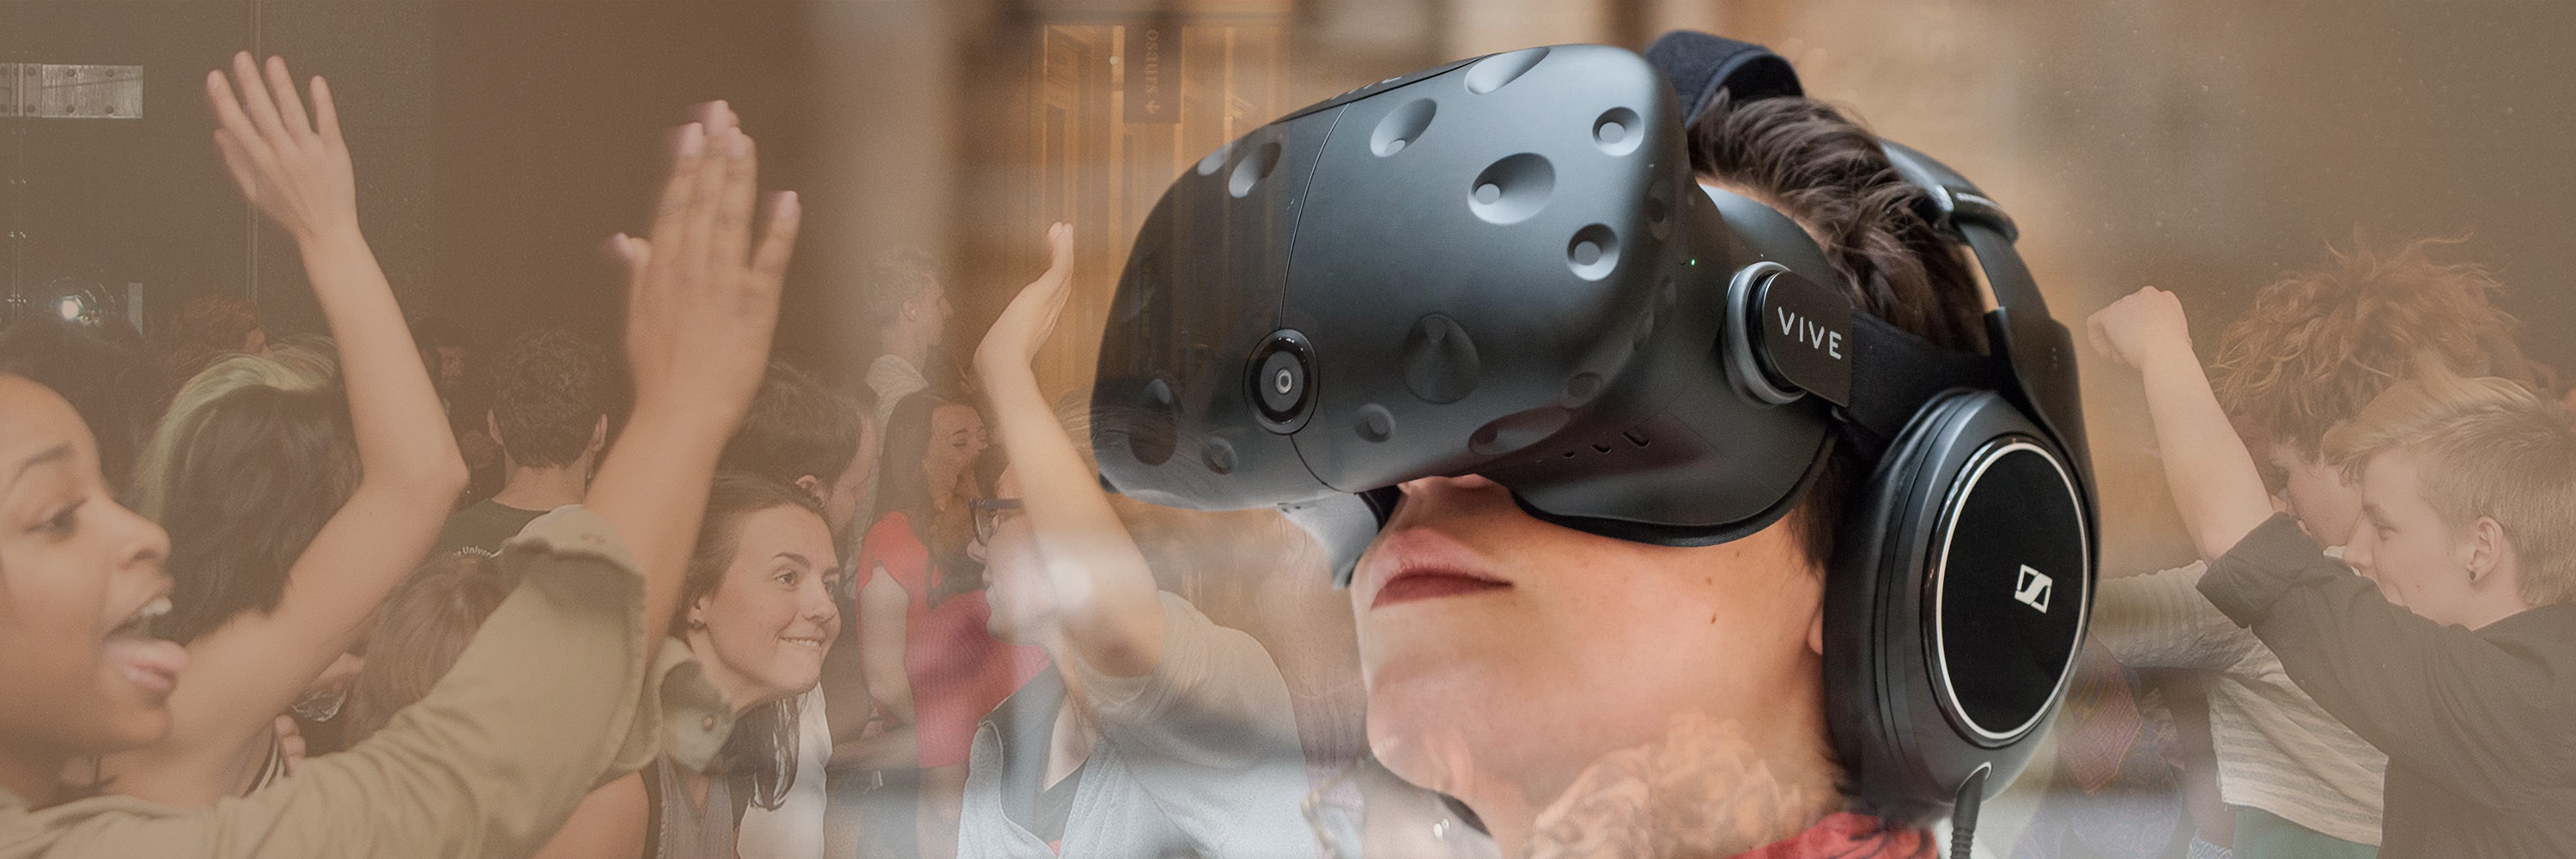 A person wearing Virtual Reality headgear